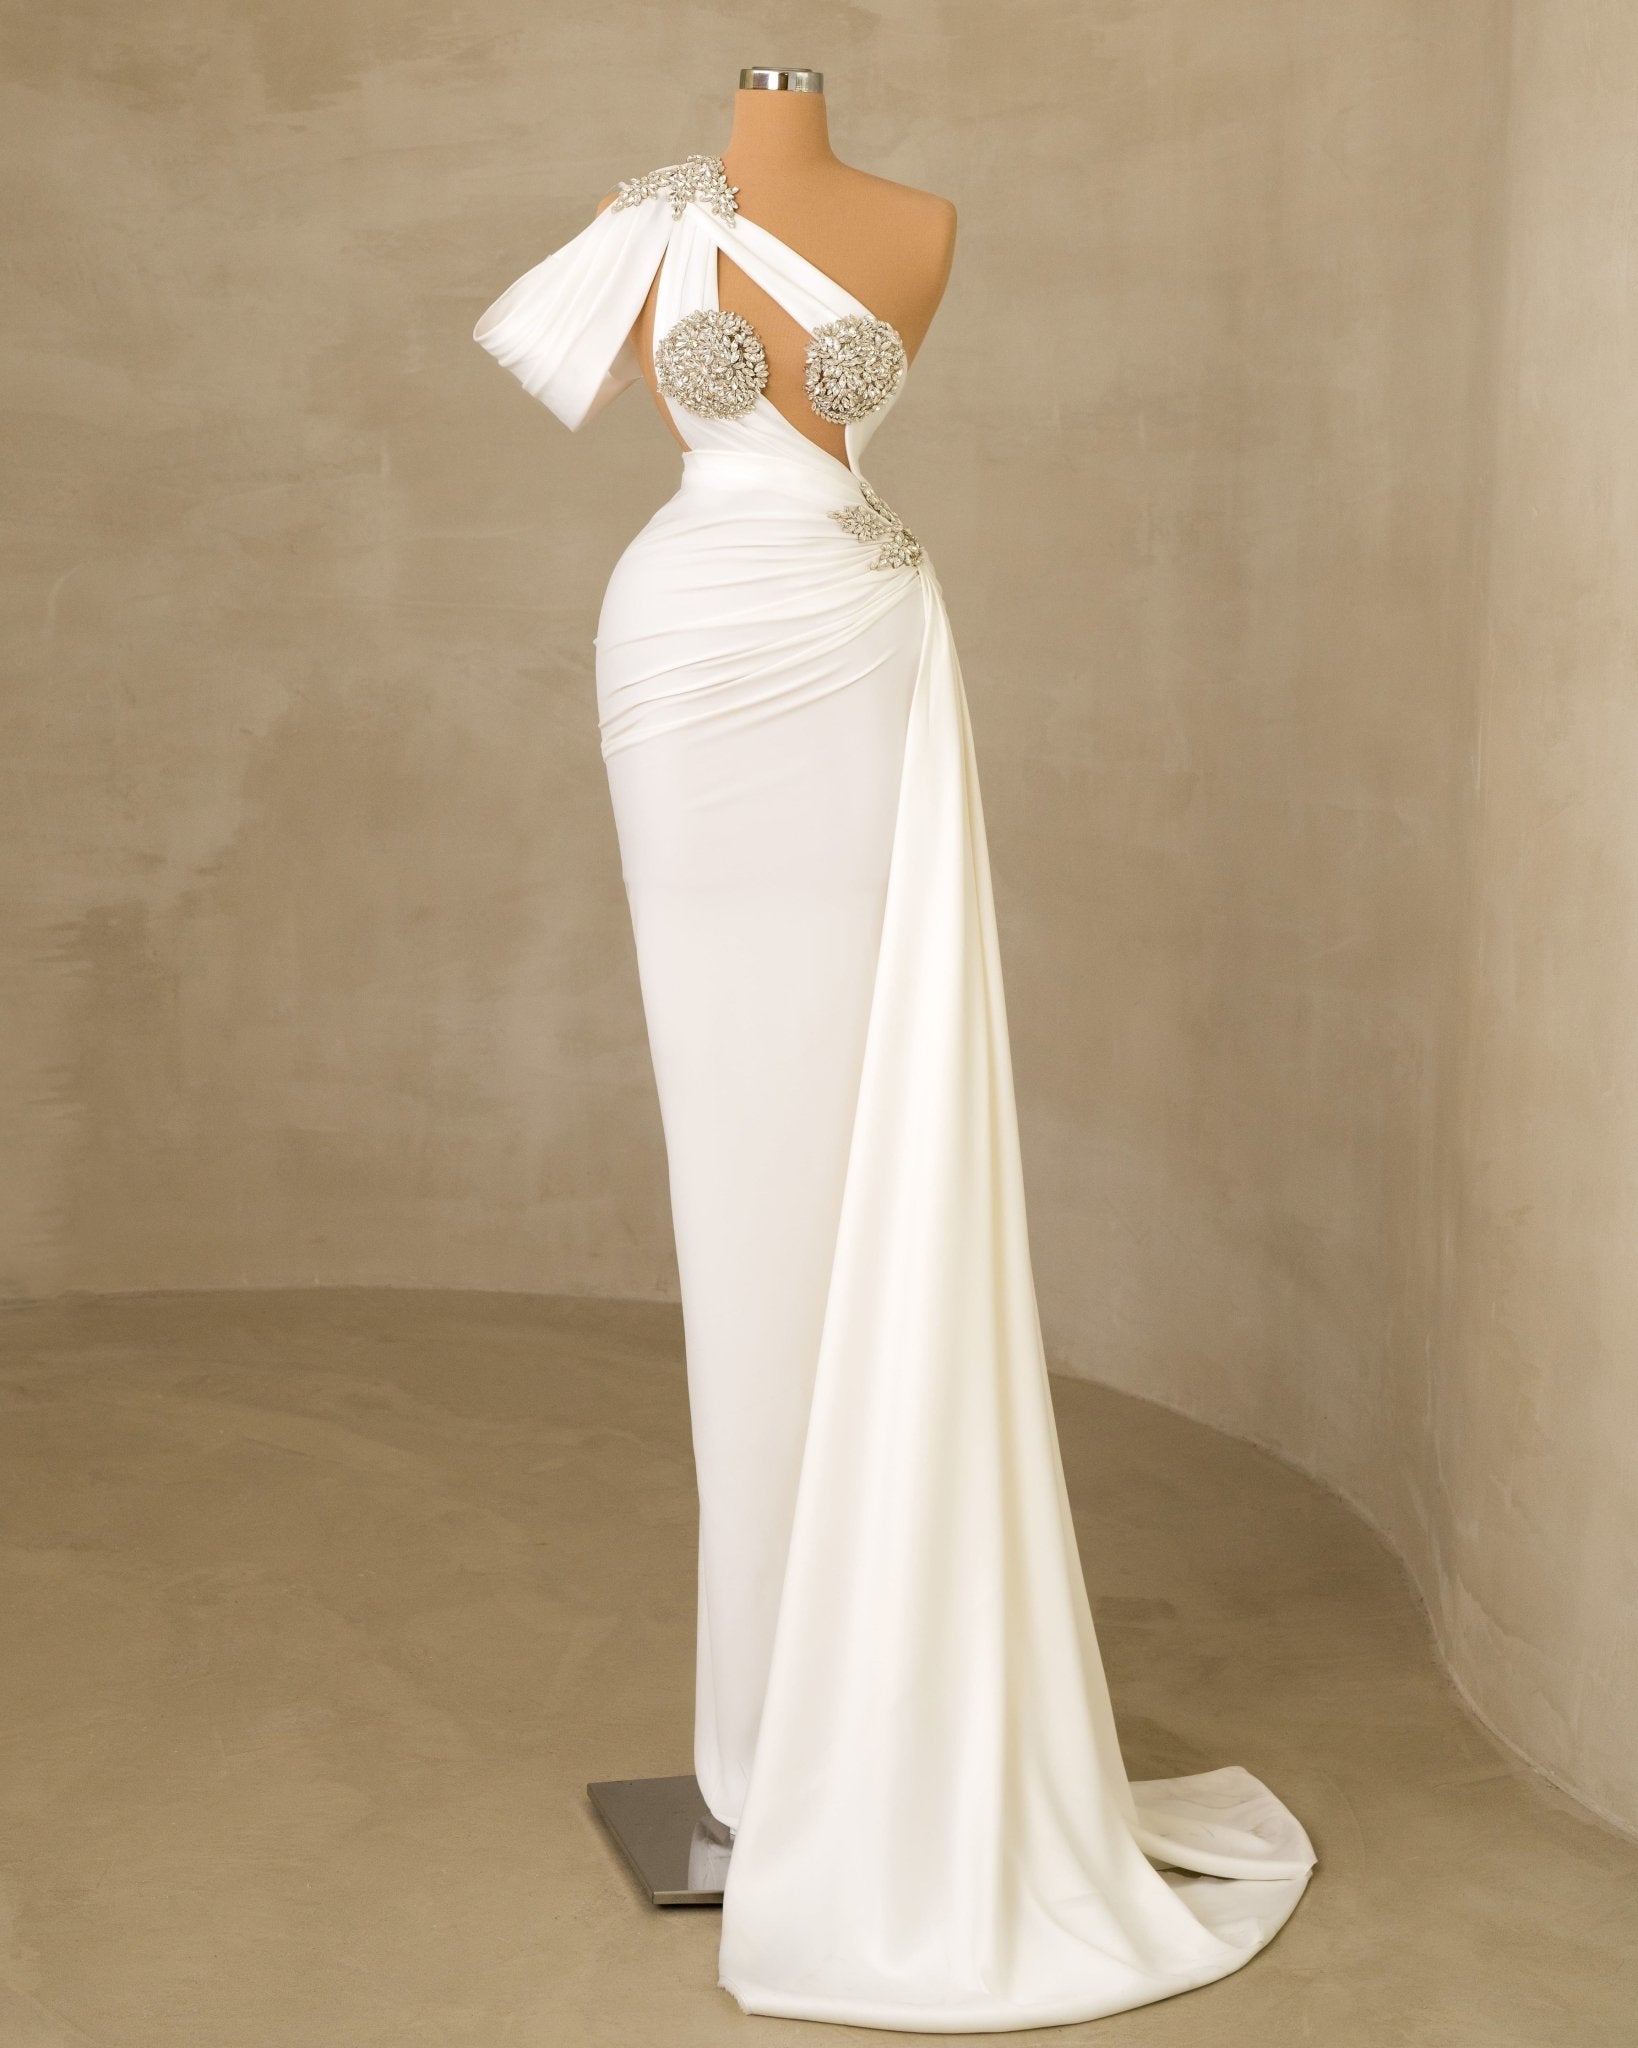 Thinyfull Greek Goddess Wedding Dresses V Neck Empire A Line Full Length  Beading White Chiffon Summer Beach Pregnant Bridal Gown